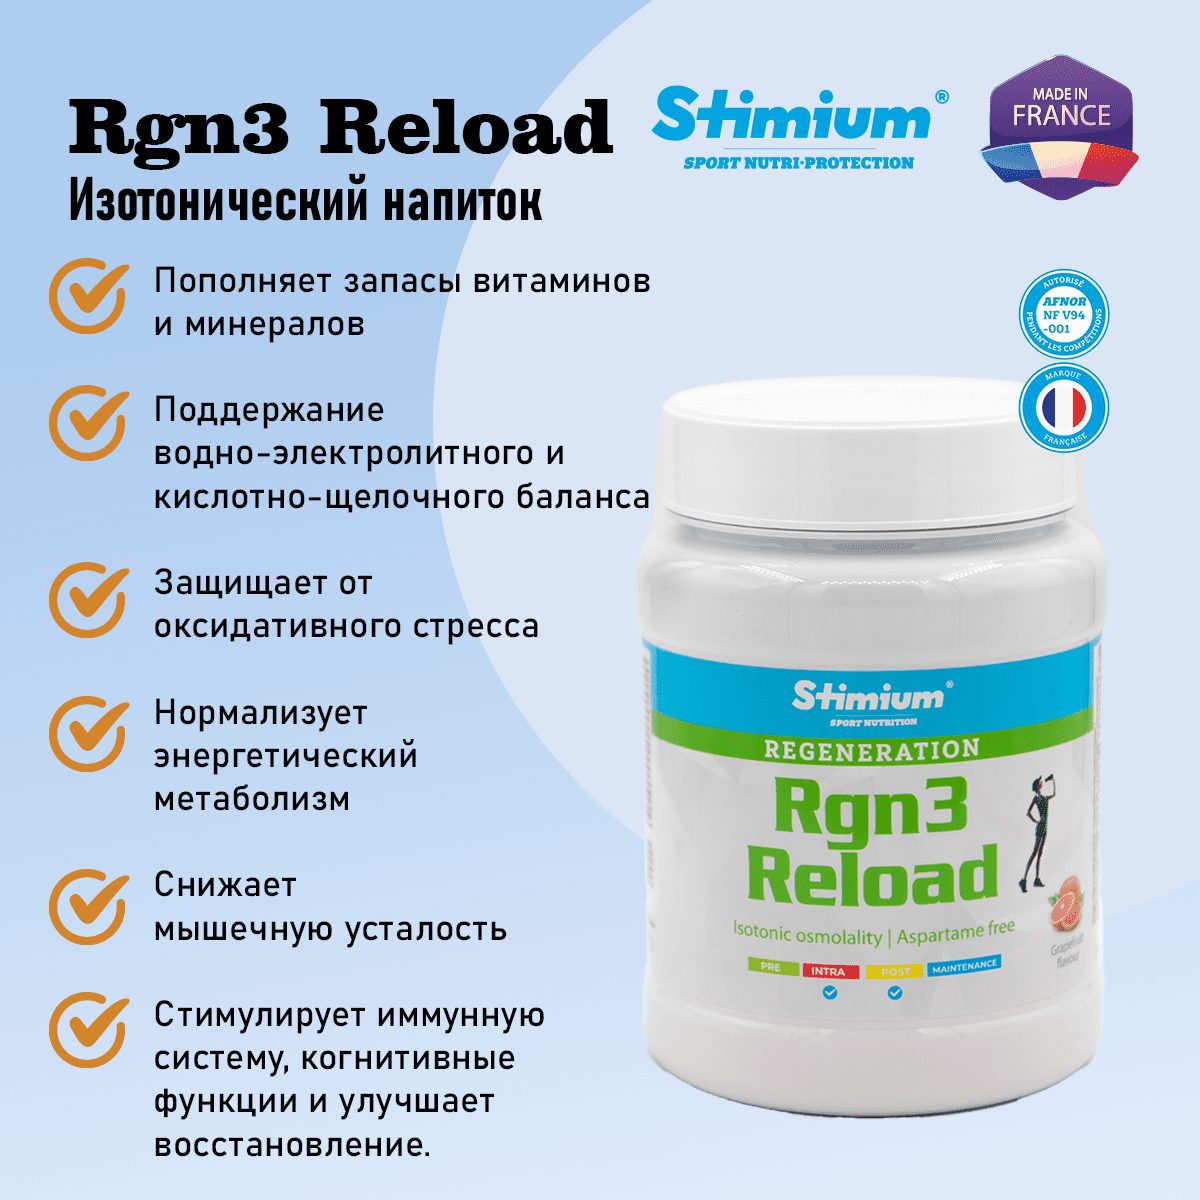 Фото 4 - Stimium® Rgn3 Reload Восстановление после нагрузки, поддержание иммунитета.